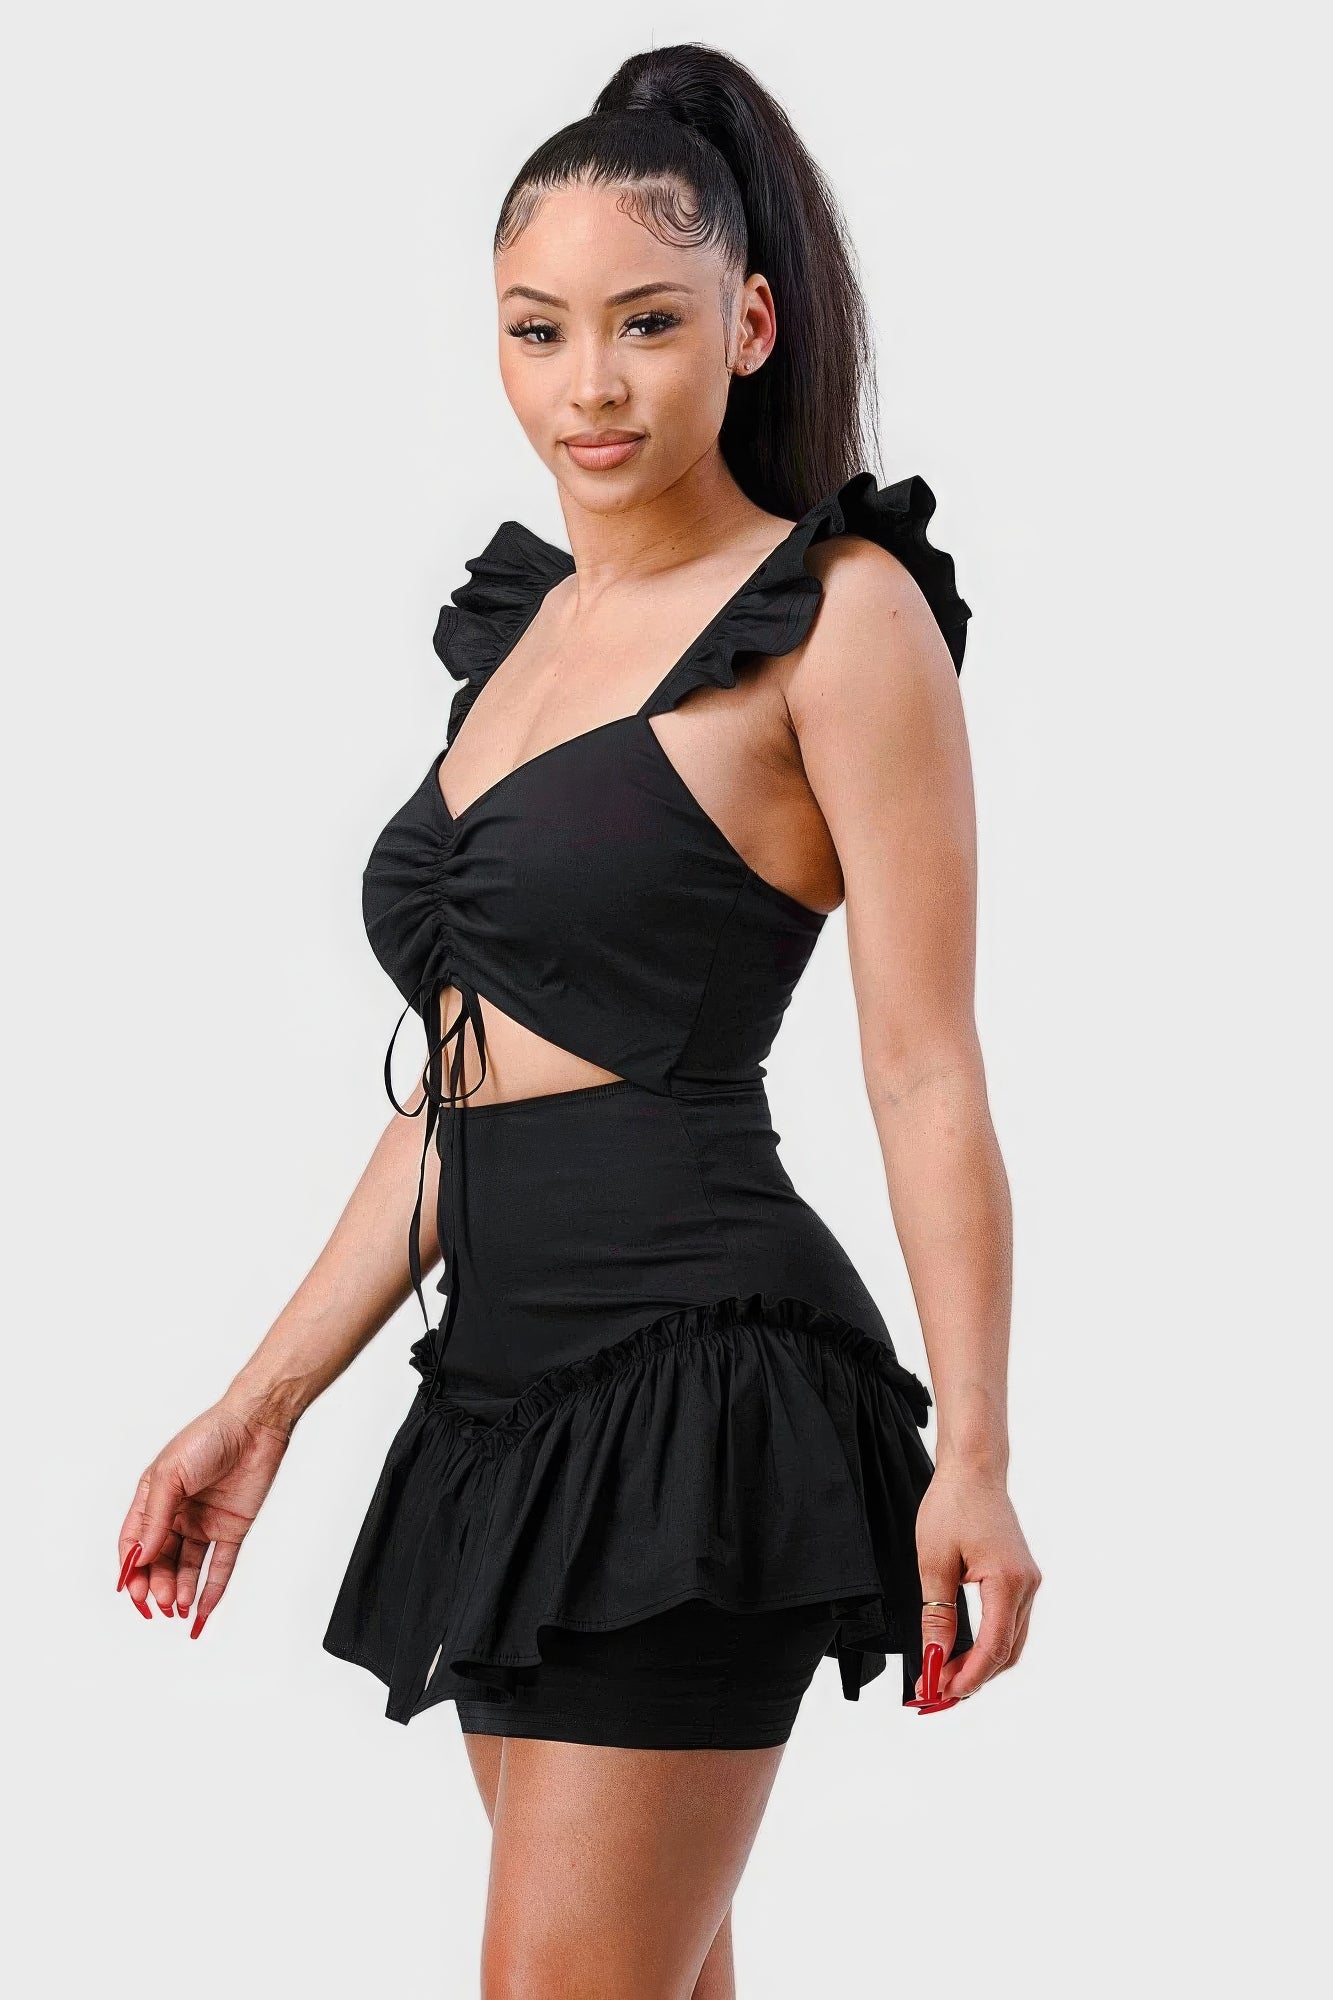 Fashionista Bow Black Cutout Ruffled Mini Dress